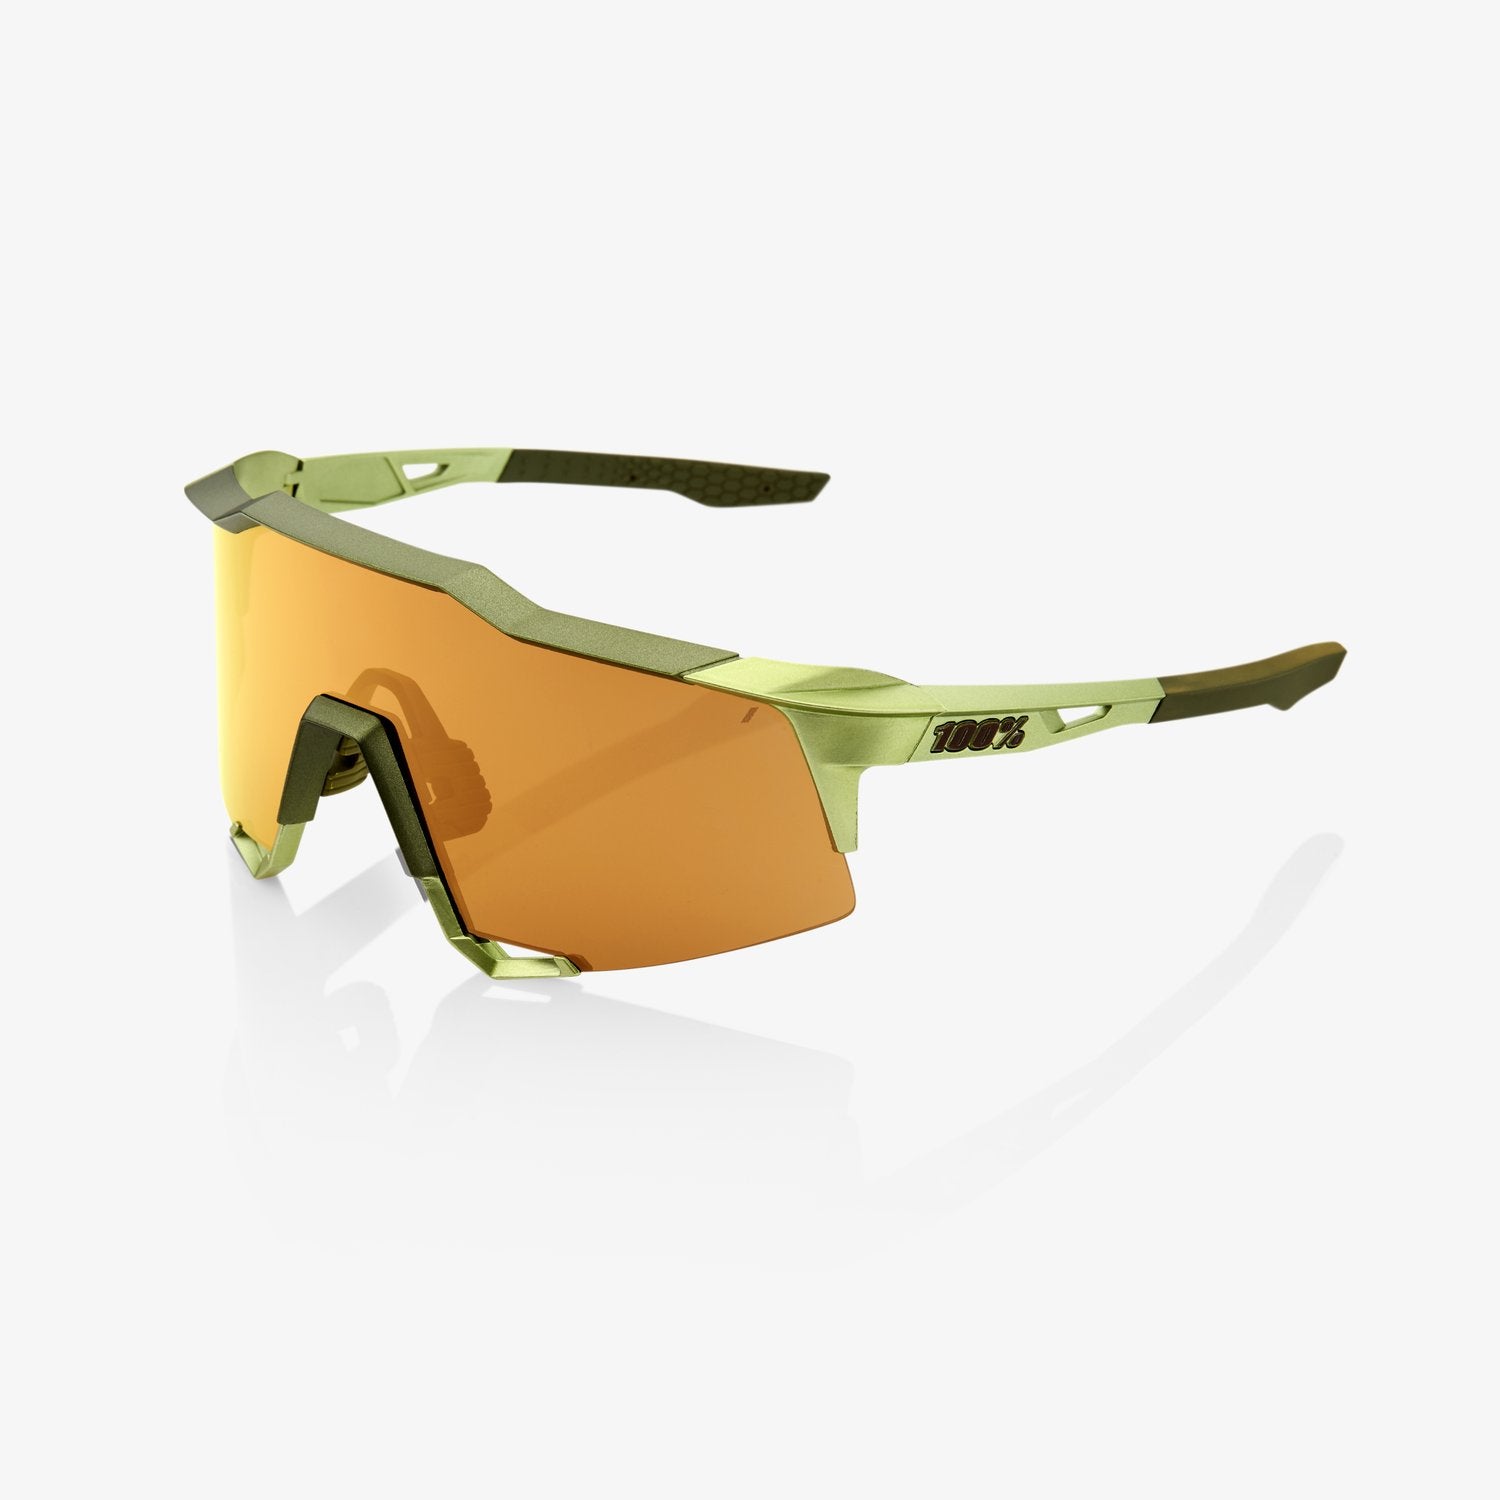 100% Speedcraft Sunglasses, 2021 - Cycle Closet